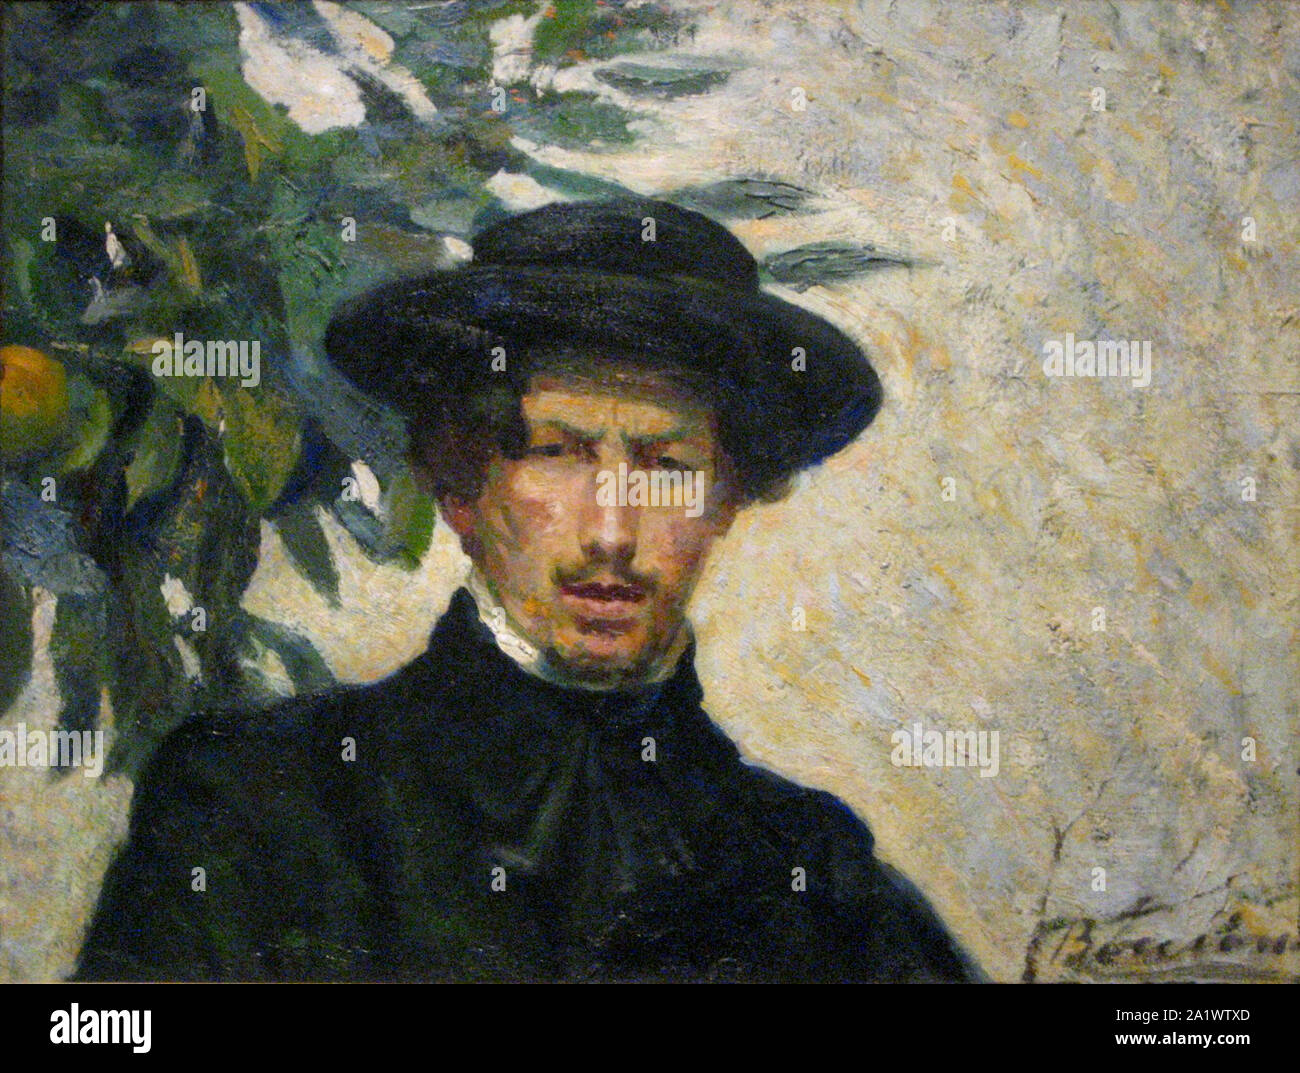 Umberto Boccioni (1882 - 1916), pintor y escultor italiano. Autorretrato, 1905, Umberto Boccioni Foto de stock